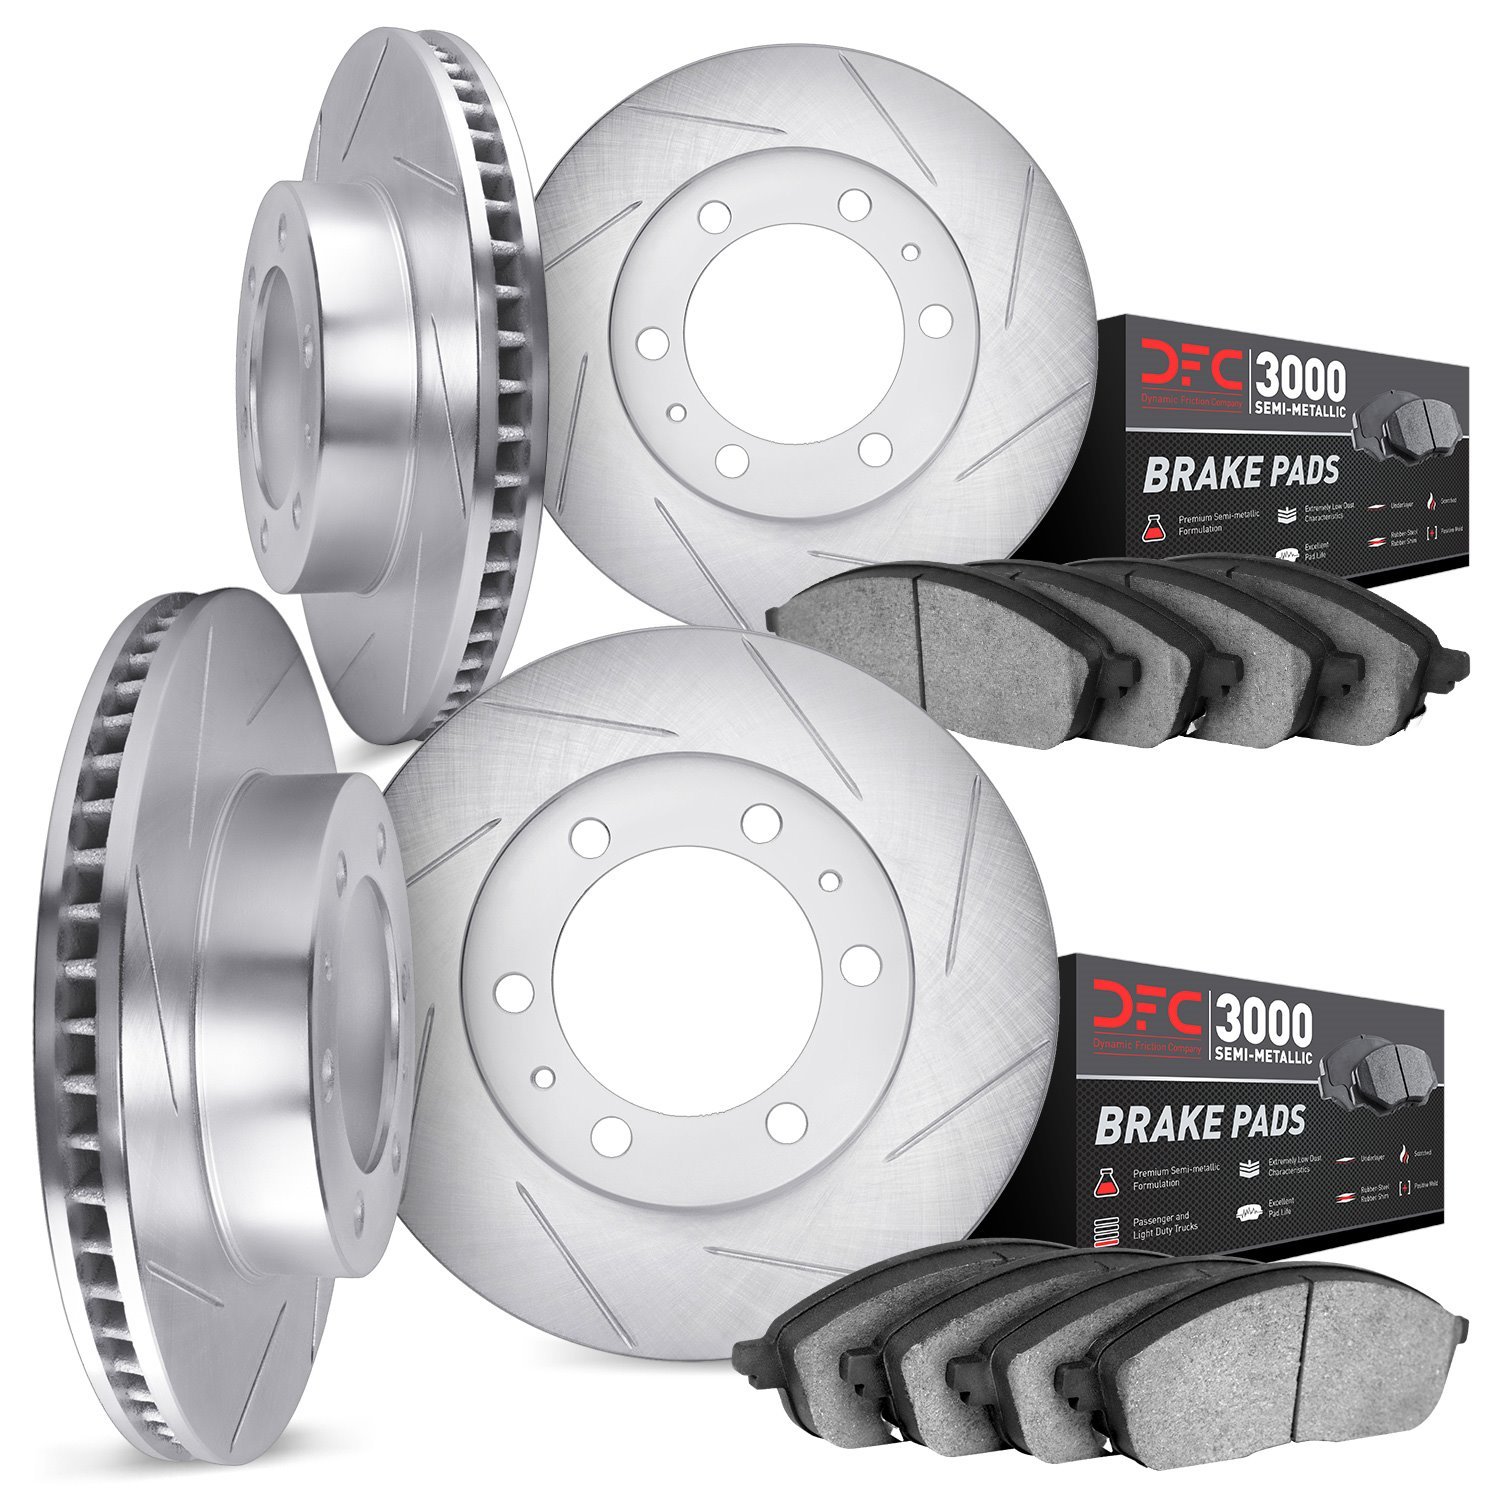 5114-48018 Slotted Brake Rotors with 3000-Series Semi-Metallic Brake Pads Kit & Hardware [Silver], 2003-2007 GM, Position: Front